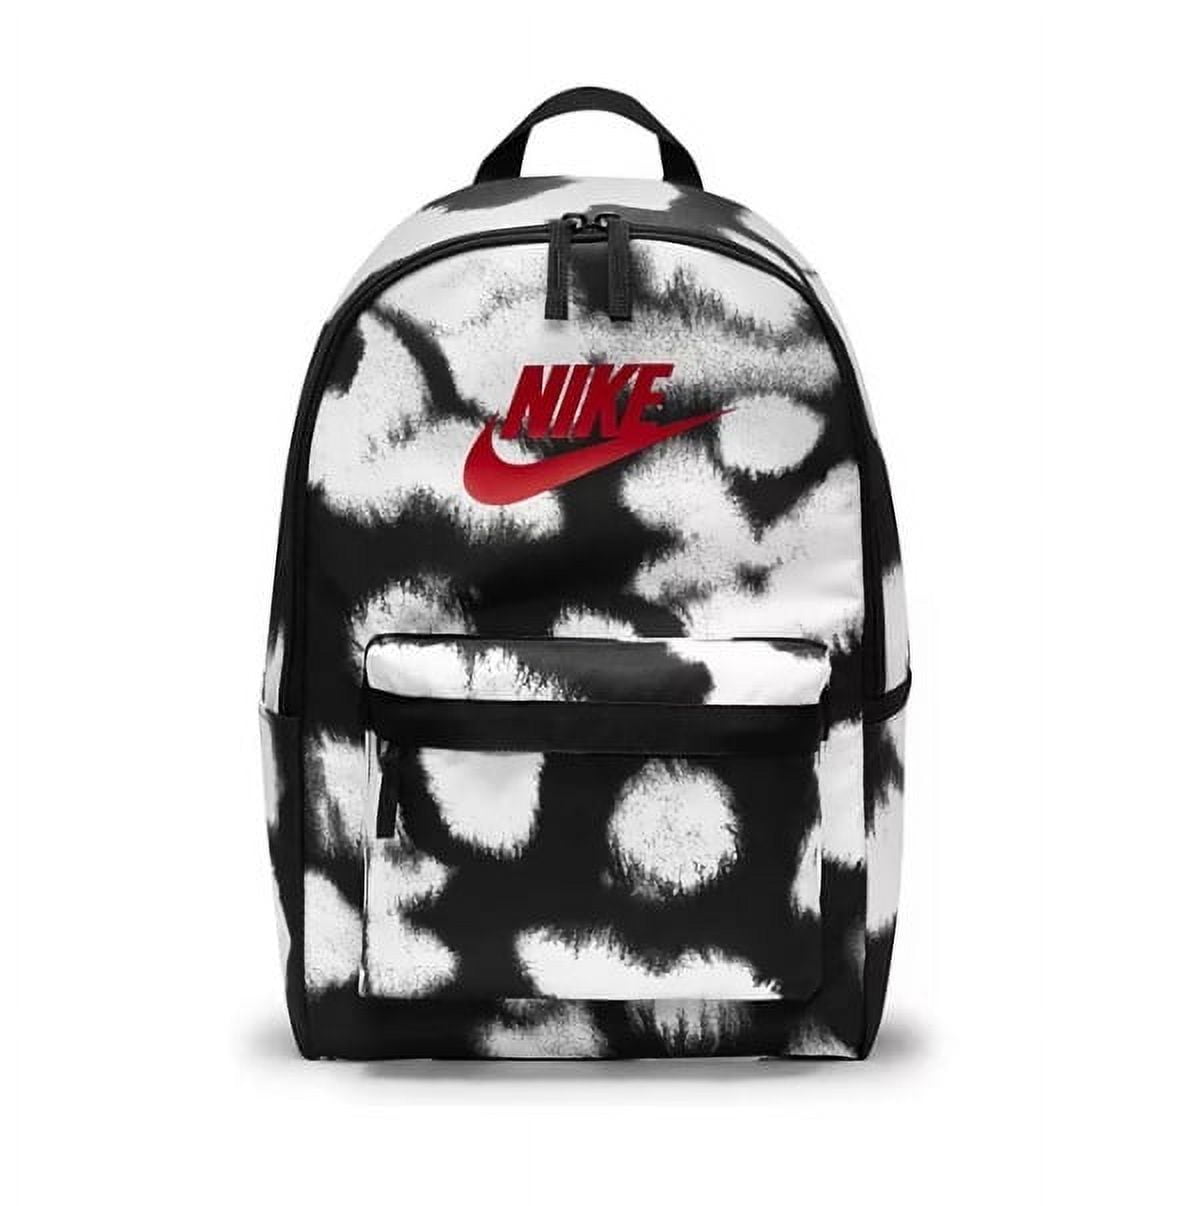 Nike Sportswear HERITAGE UNISEX - Sac à dos - black/white/noir 